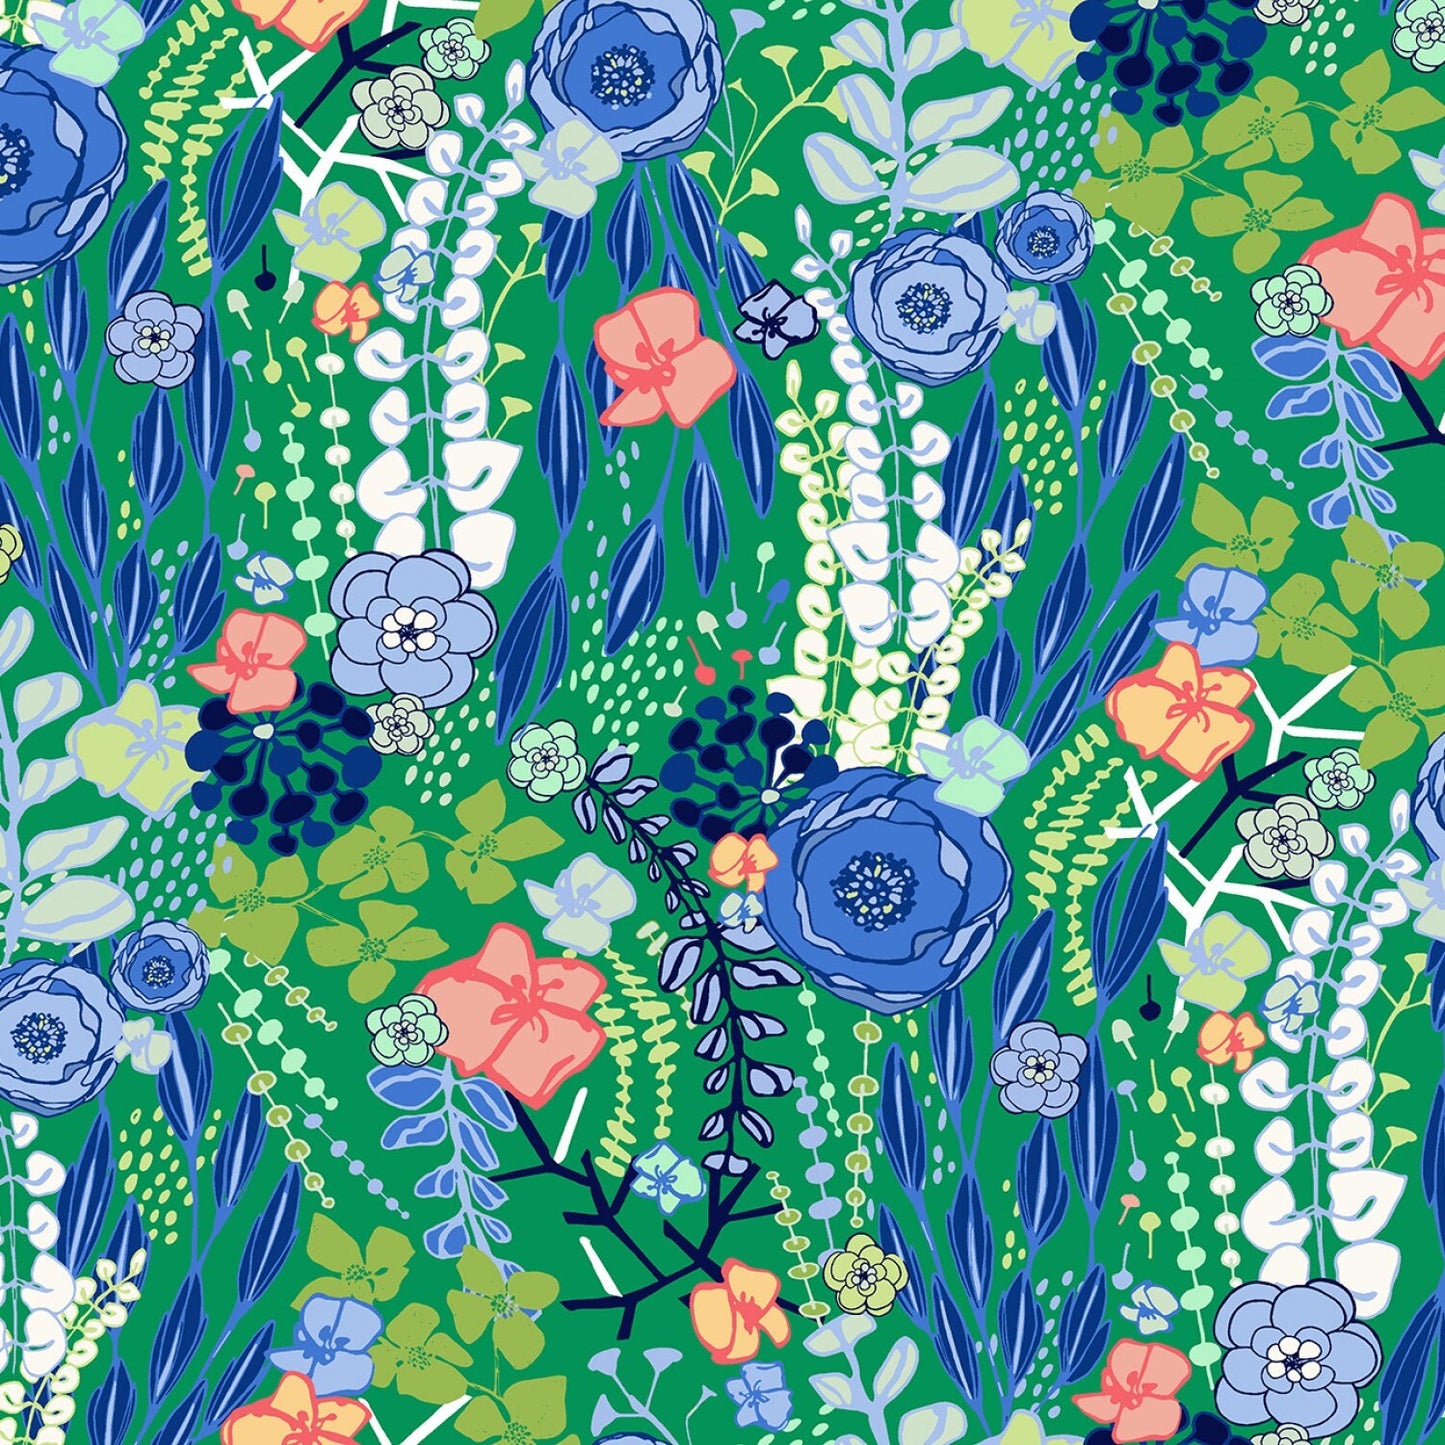 Margot 17 Piece Fat Quarter Bundle, Clothworks FQ0390, Blue Coral Green Floral Cotton Quilt Fabric, 18 x 22 Fabric Cuts